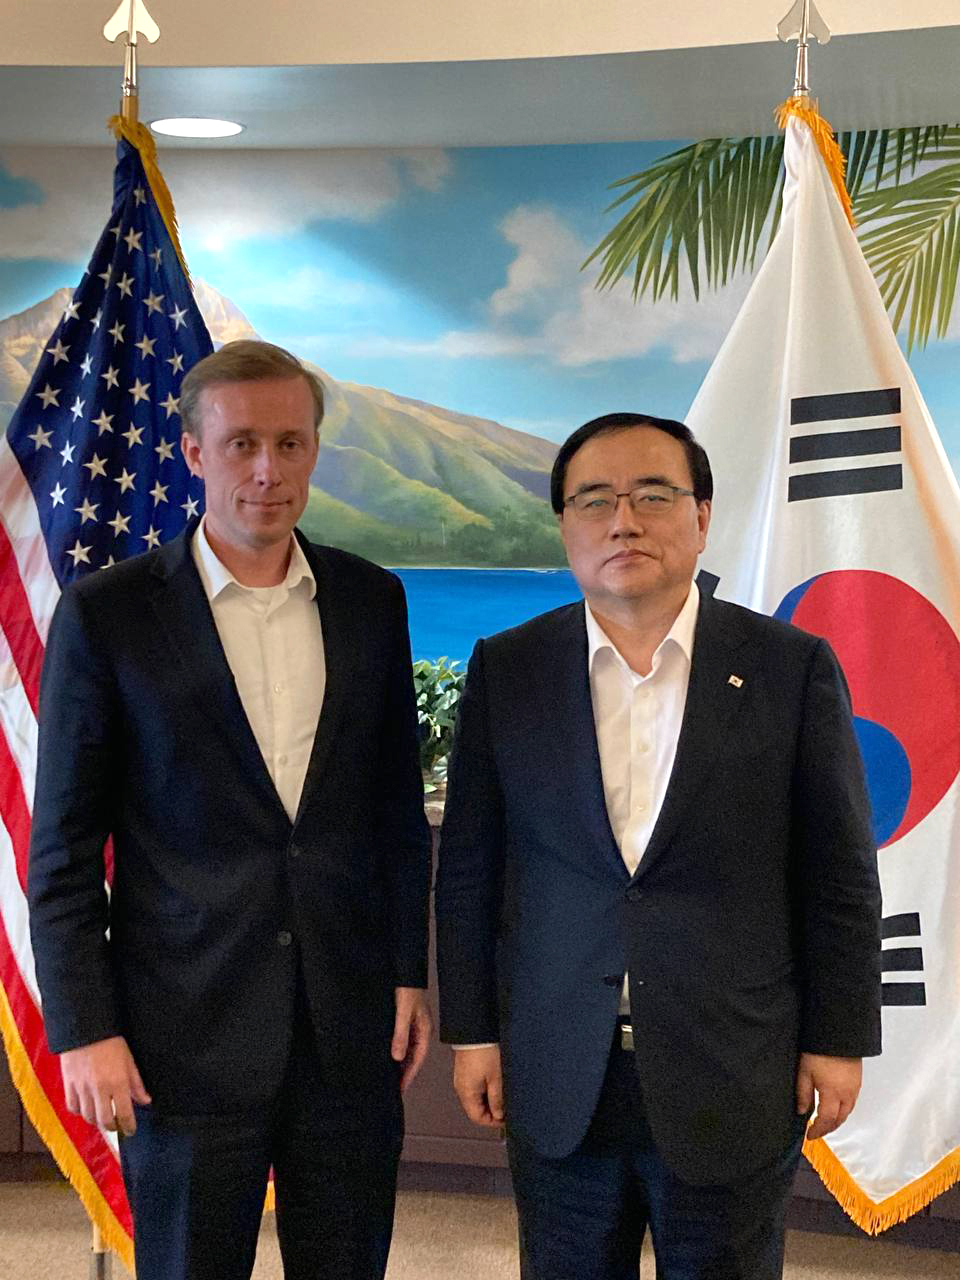 South Korea’s National Security Advisor Kim Sung-han (right) pose with US National Security Advisor Jake Sullivan in Honolulu, Hawaii on Thursday. (Yonhap)